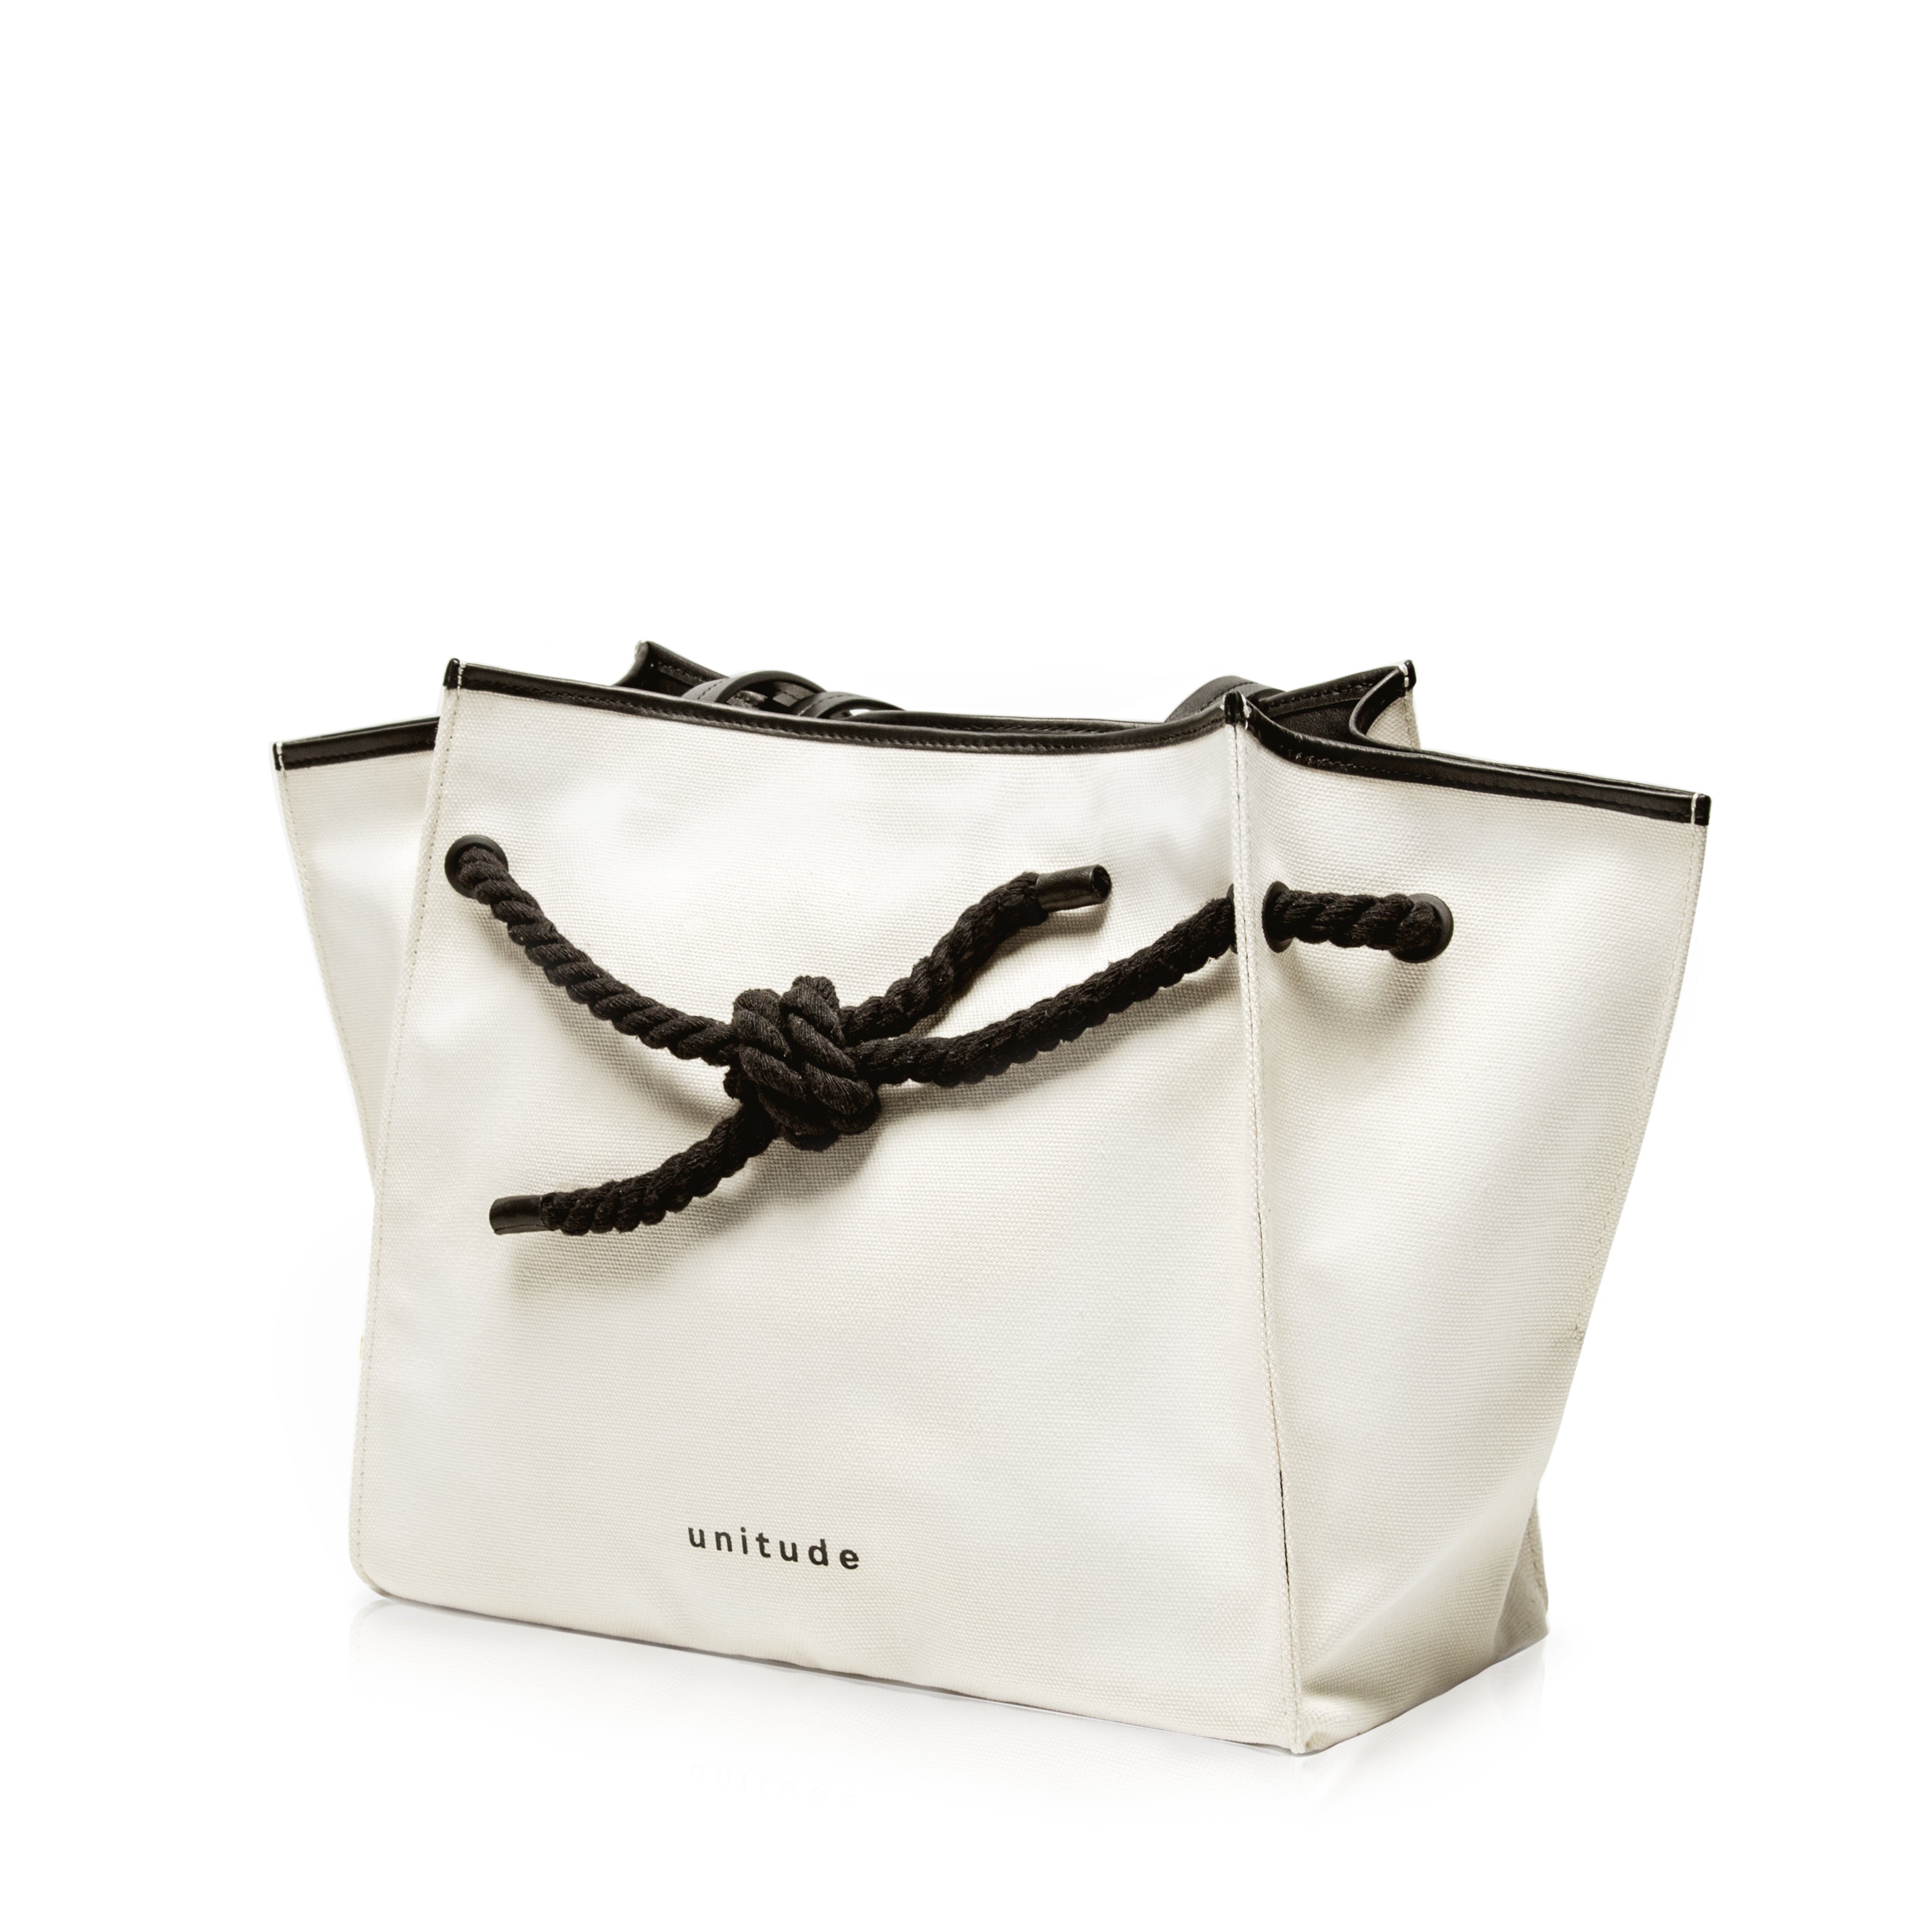 Unitude - Bambi Crossbody Bag - Cream 🦌🦌🦌 📷@enrrs ht.ly/riHI30oJ3qy